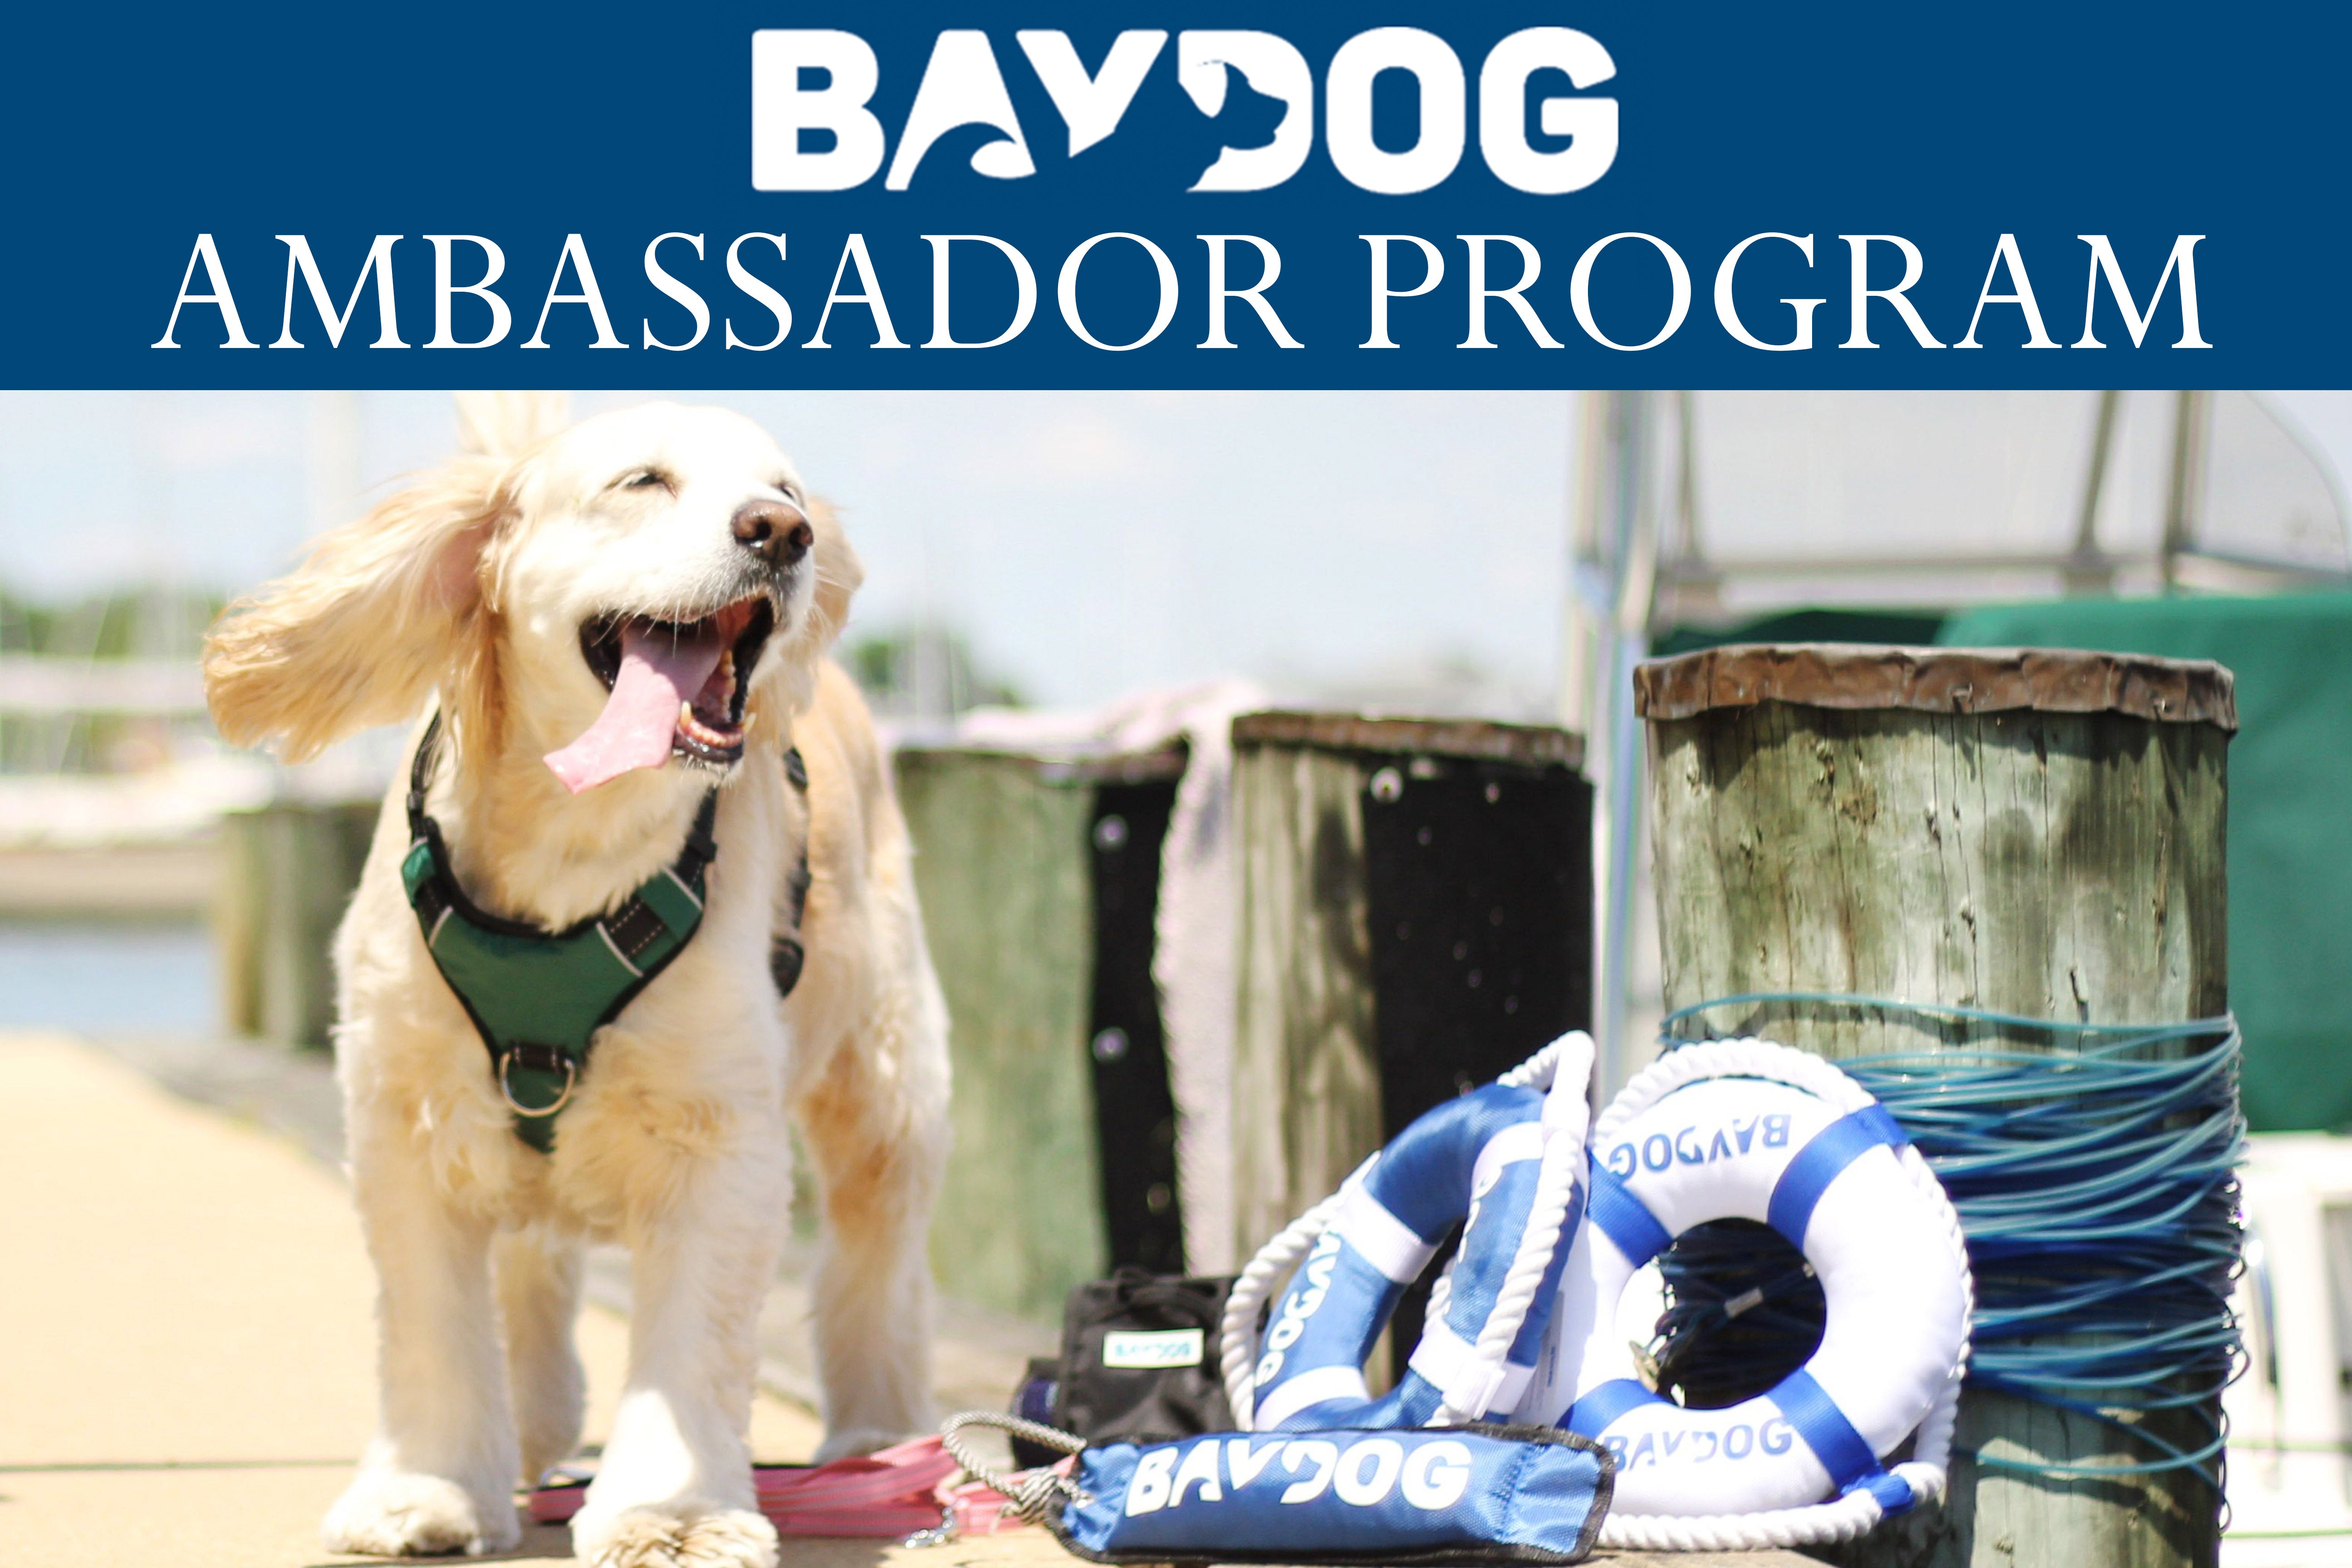 Introducing our BAYDOG Ambassador Program